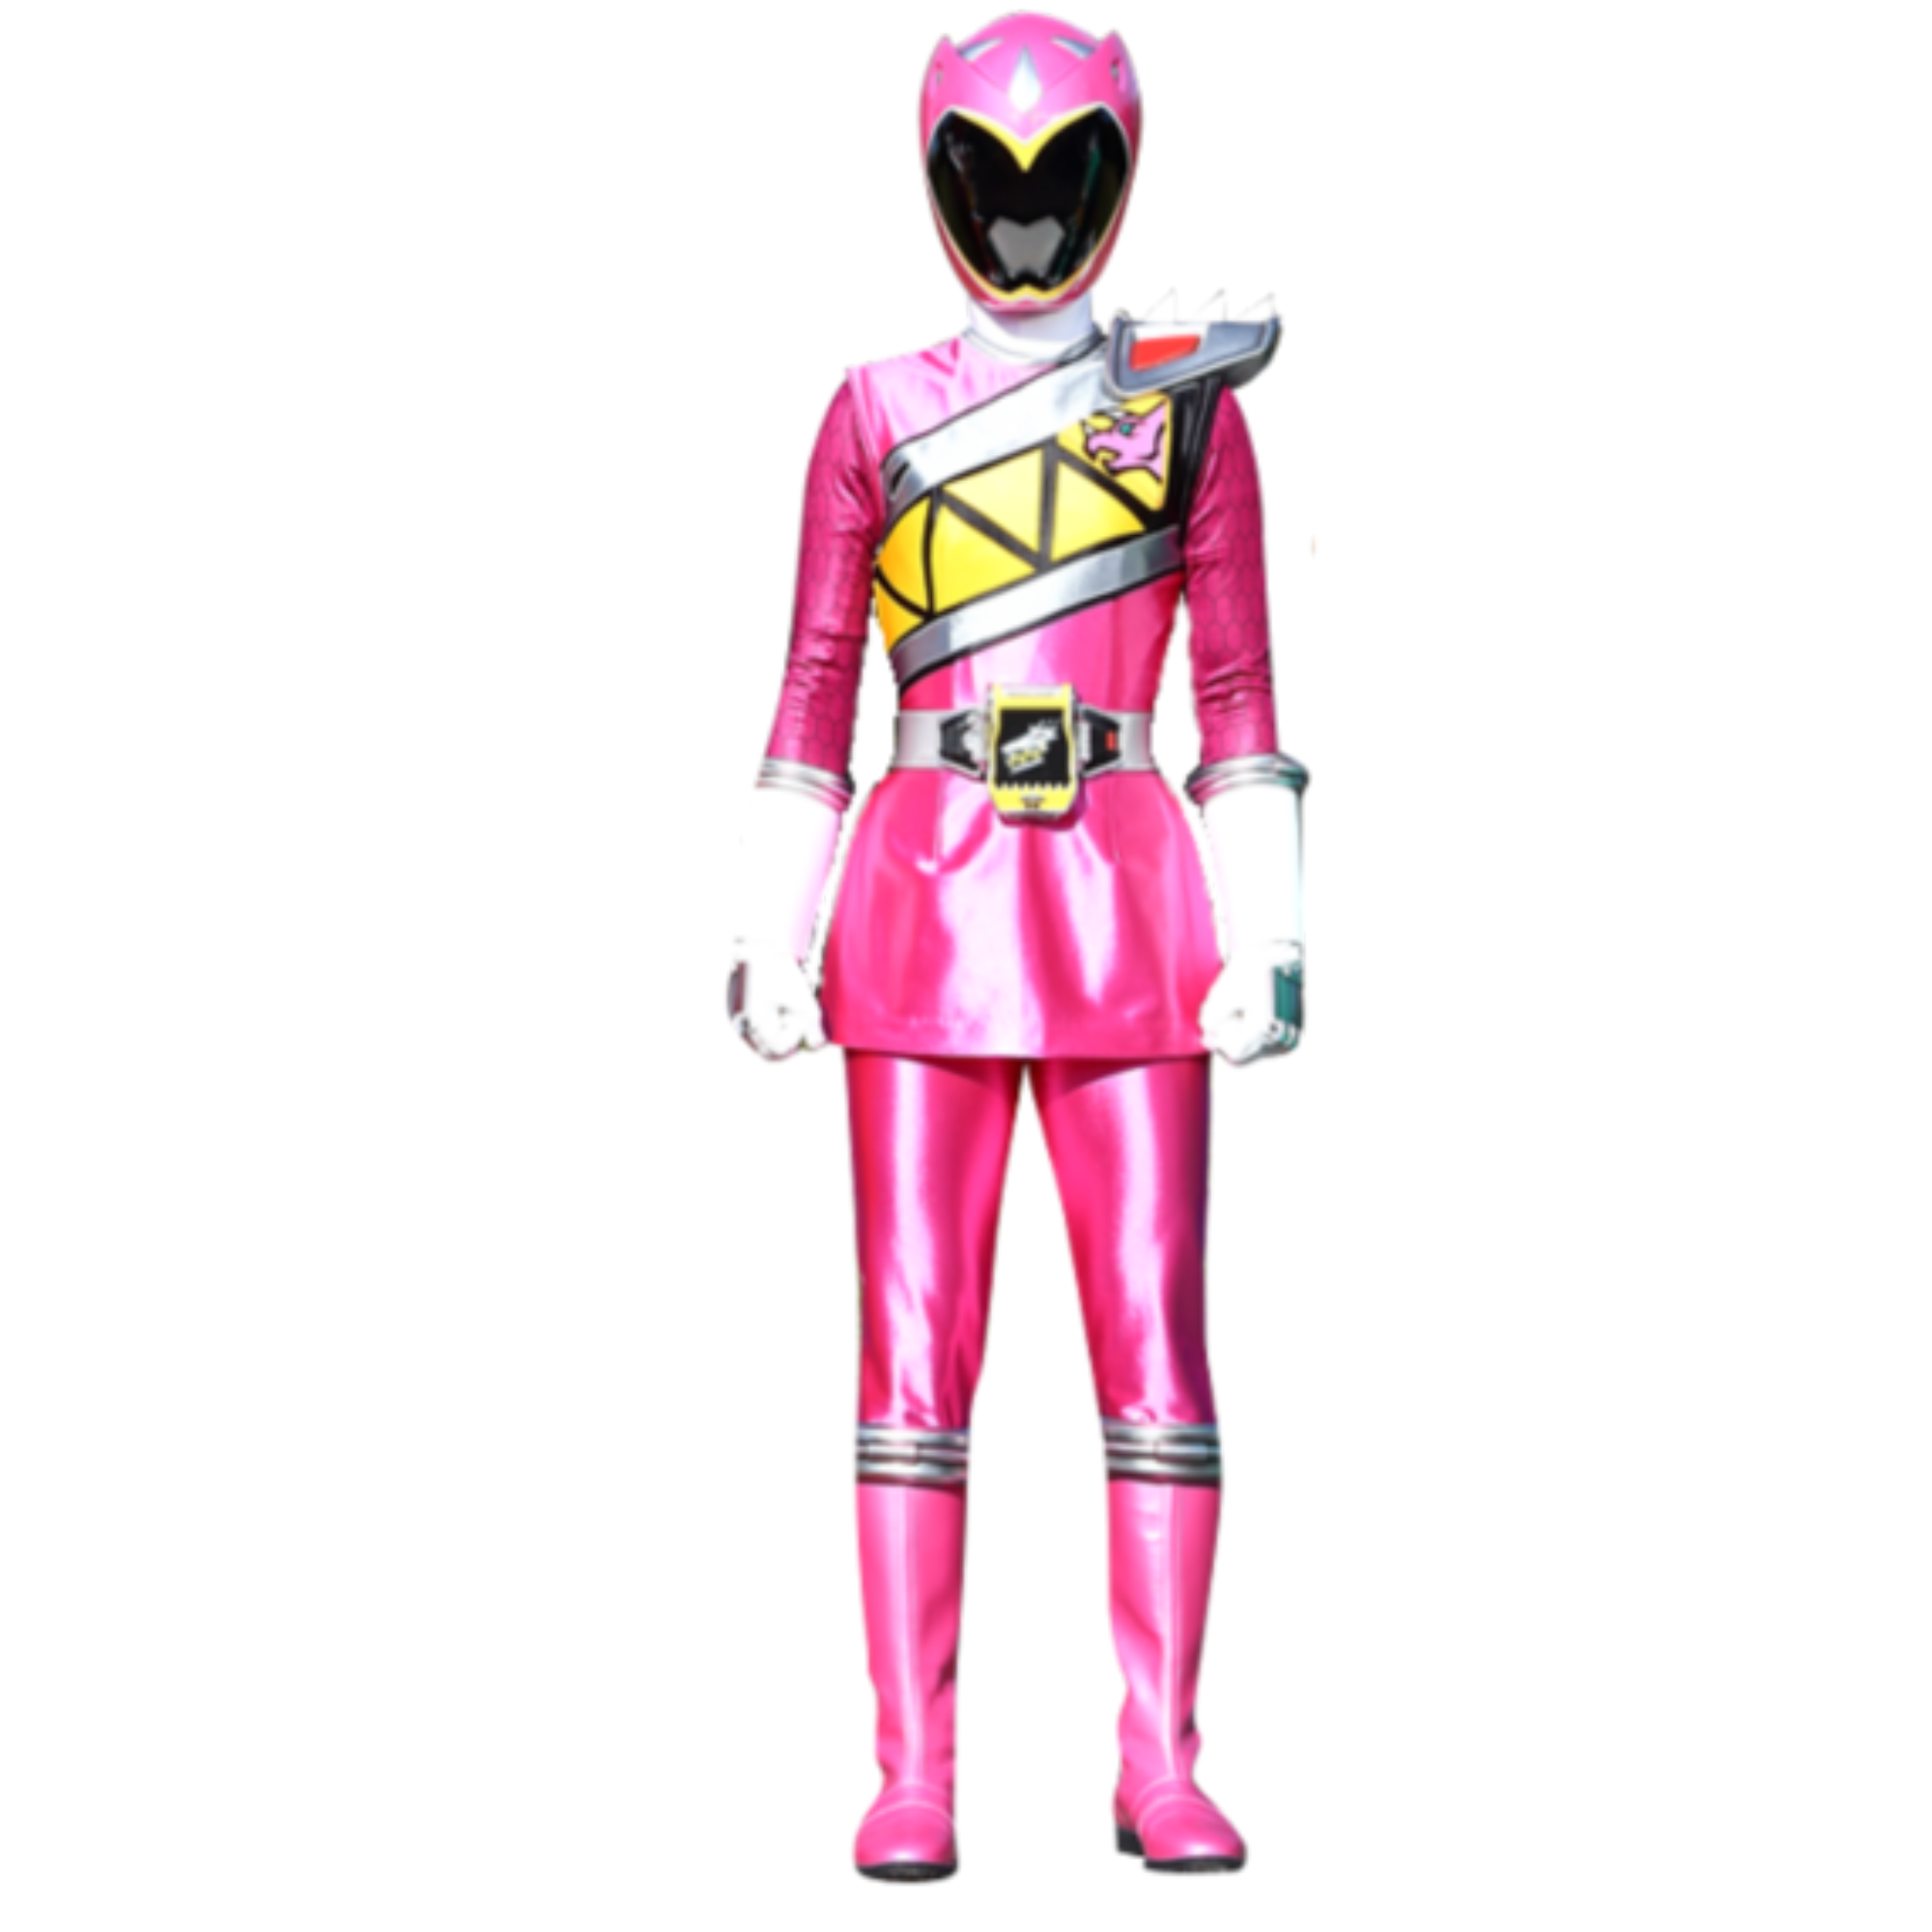 Розовый рейнджер. Power Rangers Dino charge розовый. Могучие рейнджеры Дино заряд розовый рейнджер. Розовый рейнджер Дино заряд. Могучие рейнджеры Dino заряд.